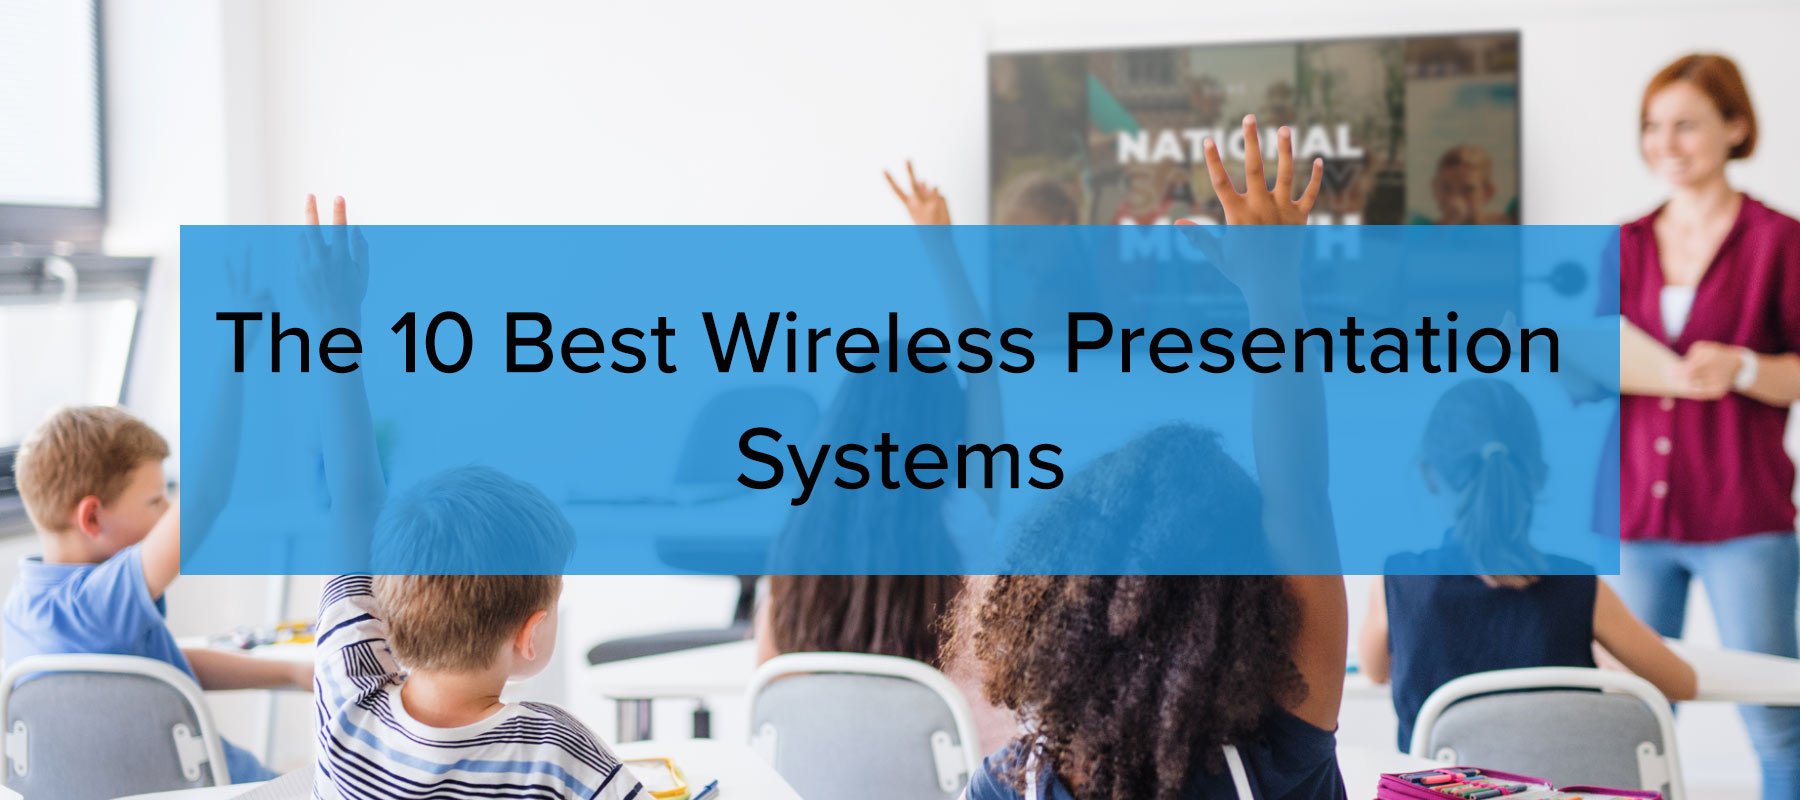 The 10 best wireless presentation systems